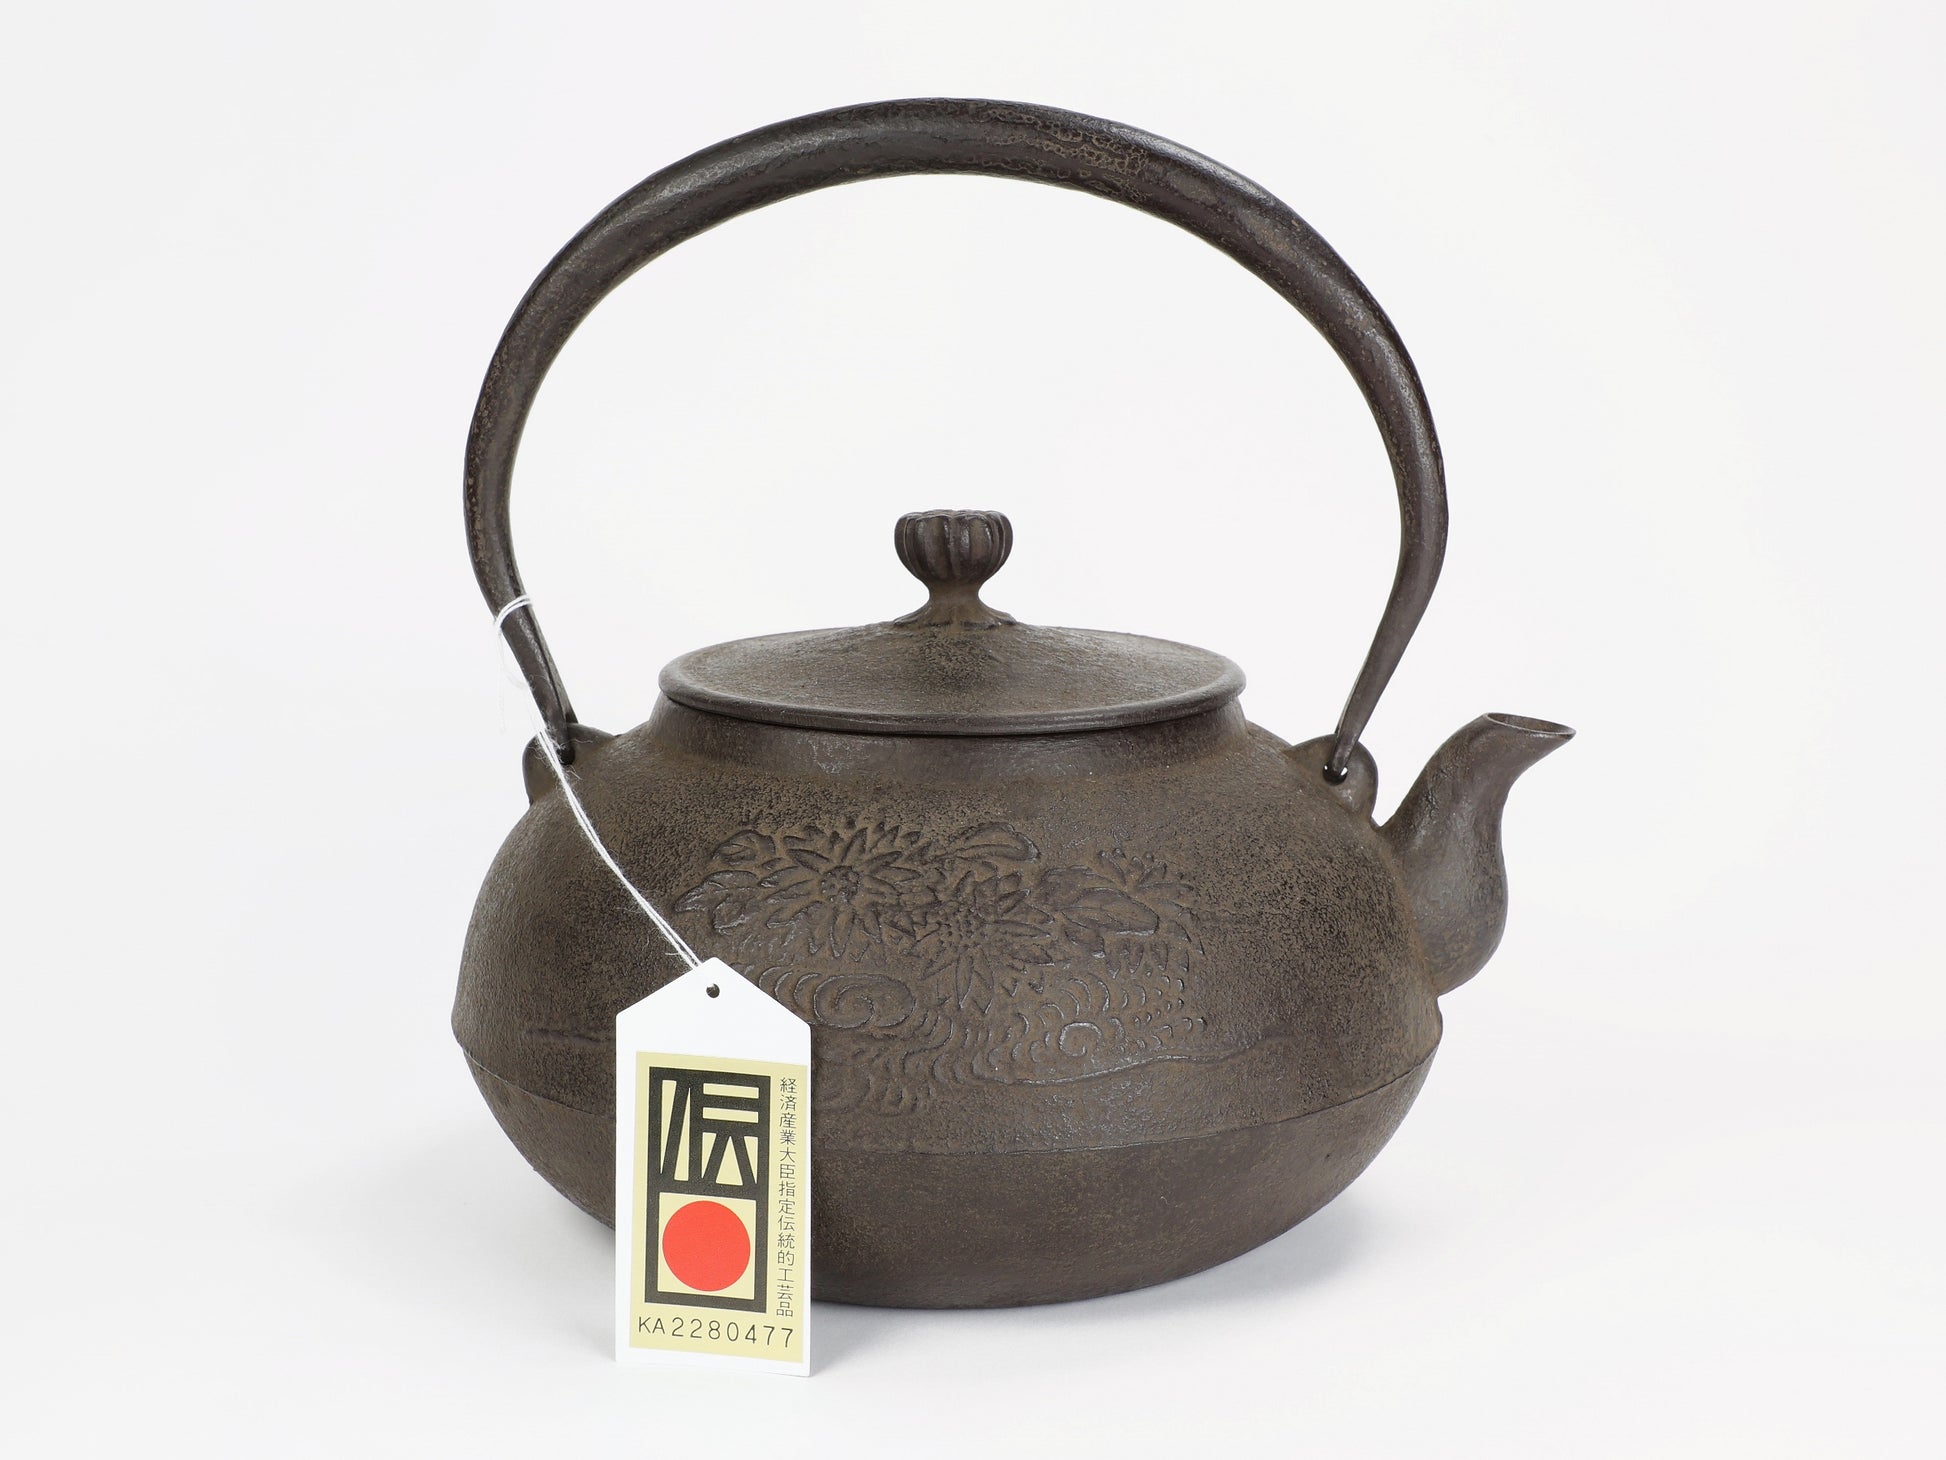 Tetsubin iron kettle, also known as Nanbu tekki, is a traditional Japanese kettle made of iron, iron casting. We are seller of handmade Tetsubin ex Kozan, Morioka, Japan. 